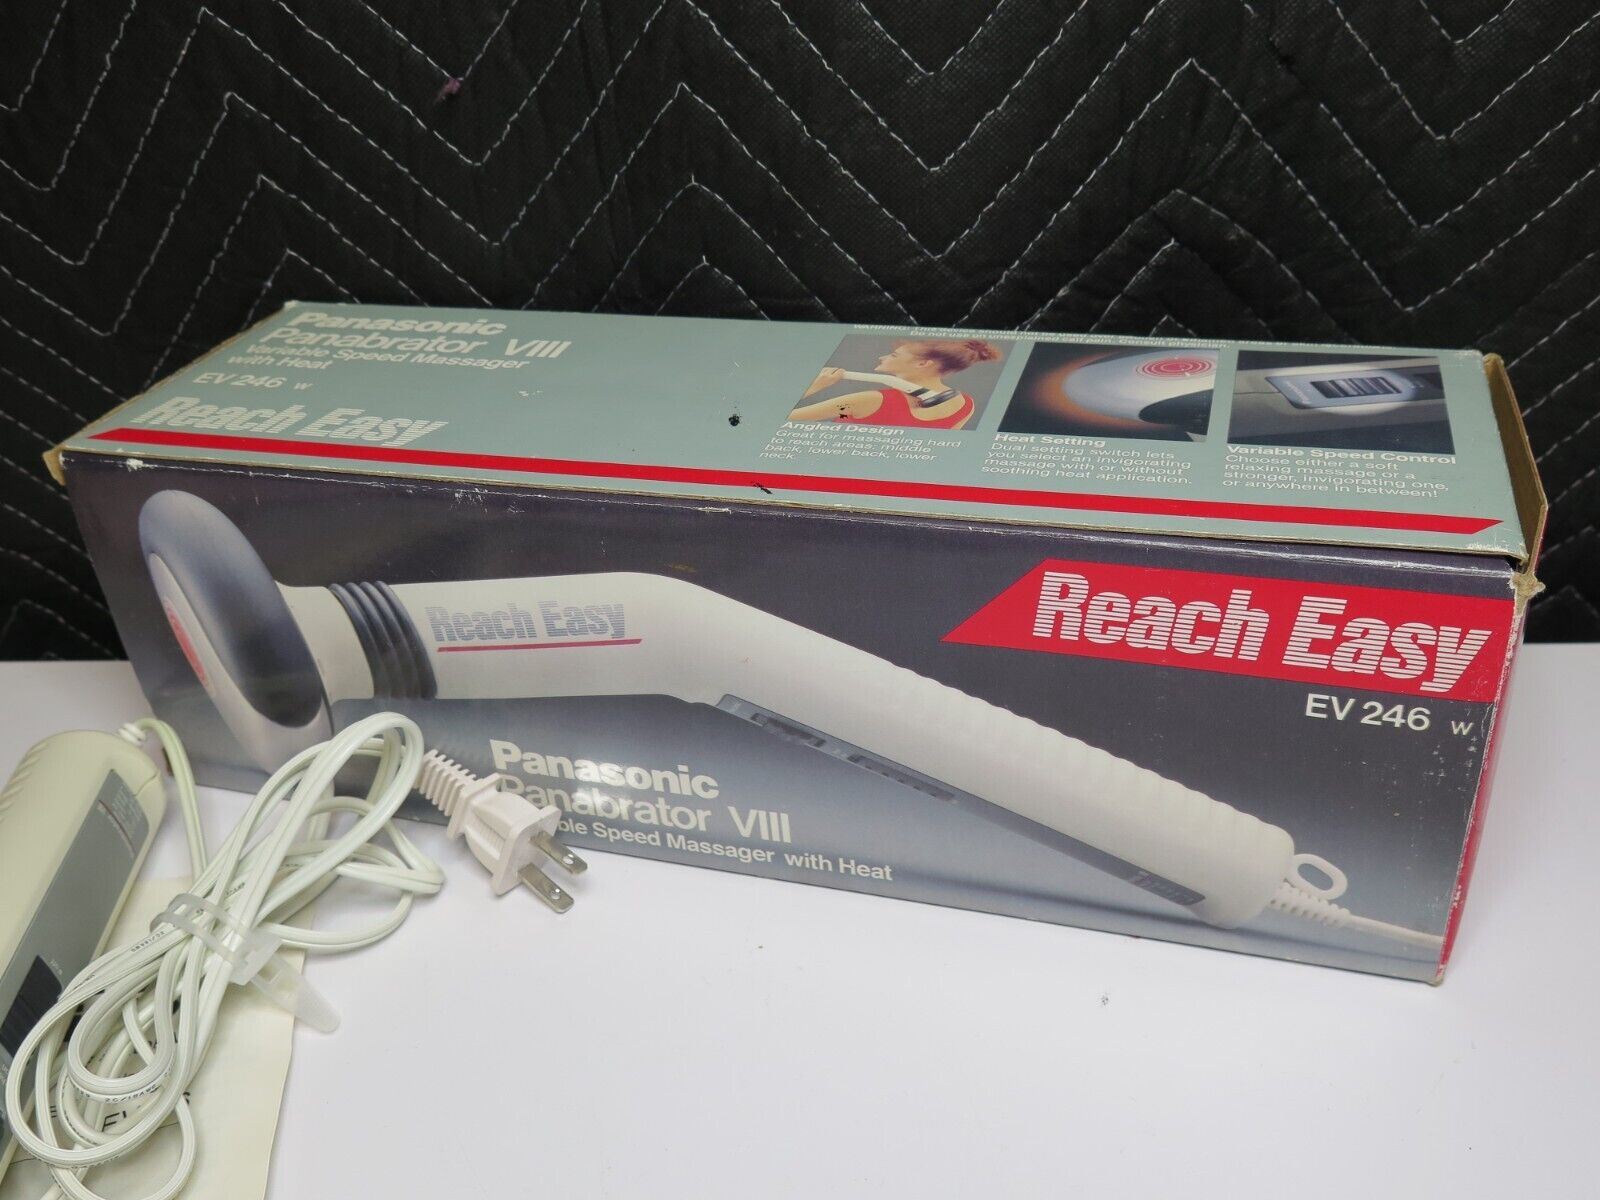 Panasonic REACH EASY Cordless Massager EV241 Handheld 2 Speed Panabrator XII